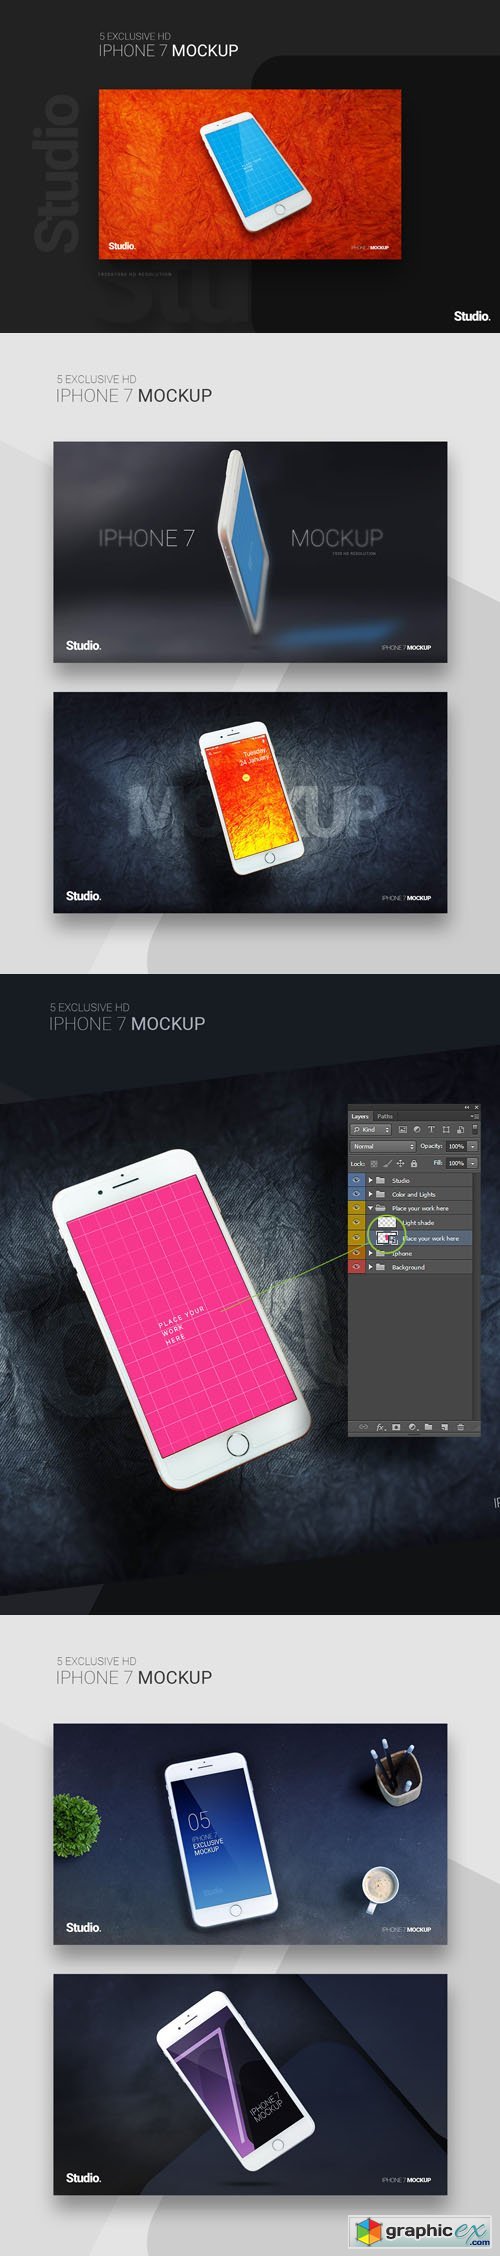 Iphone 7 Mockup - 5 Exclusive Screens